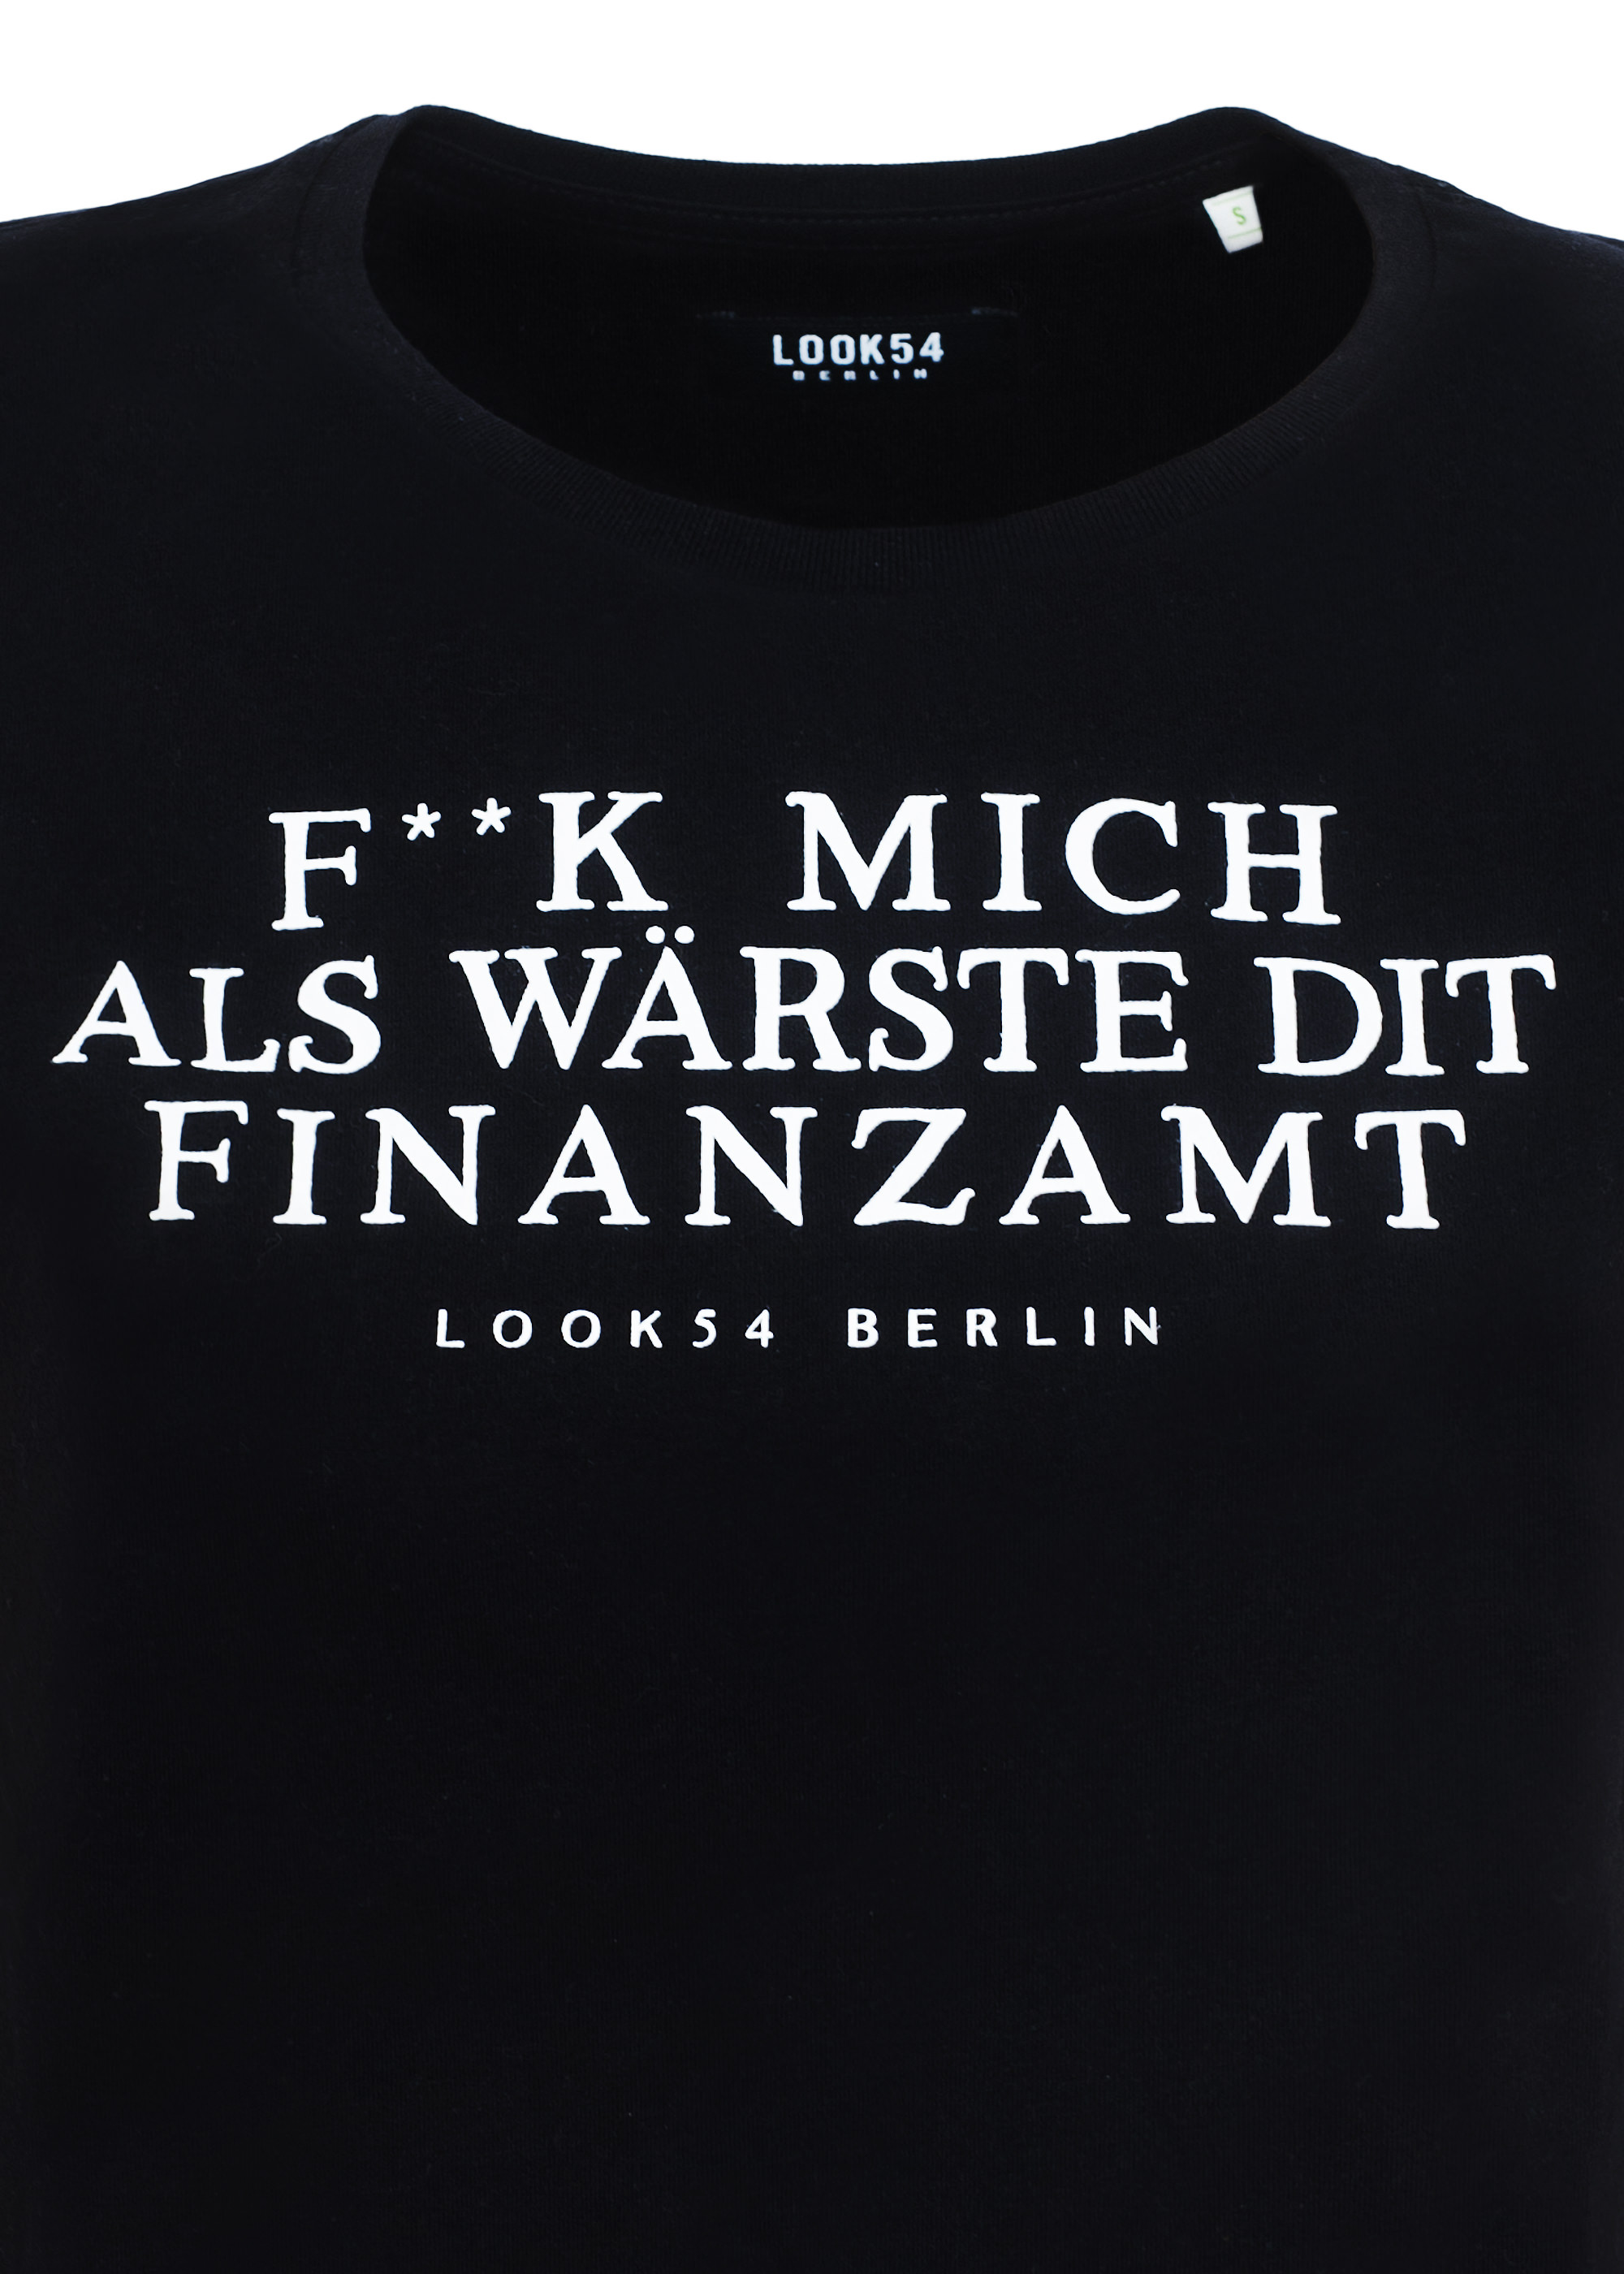 F**k mich Finanzamt - Shirt